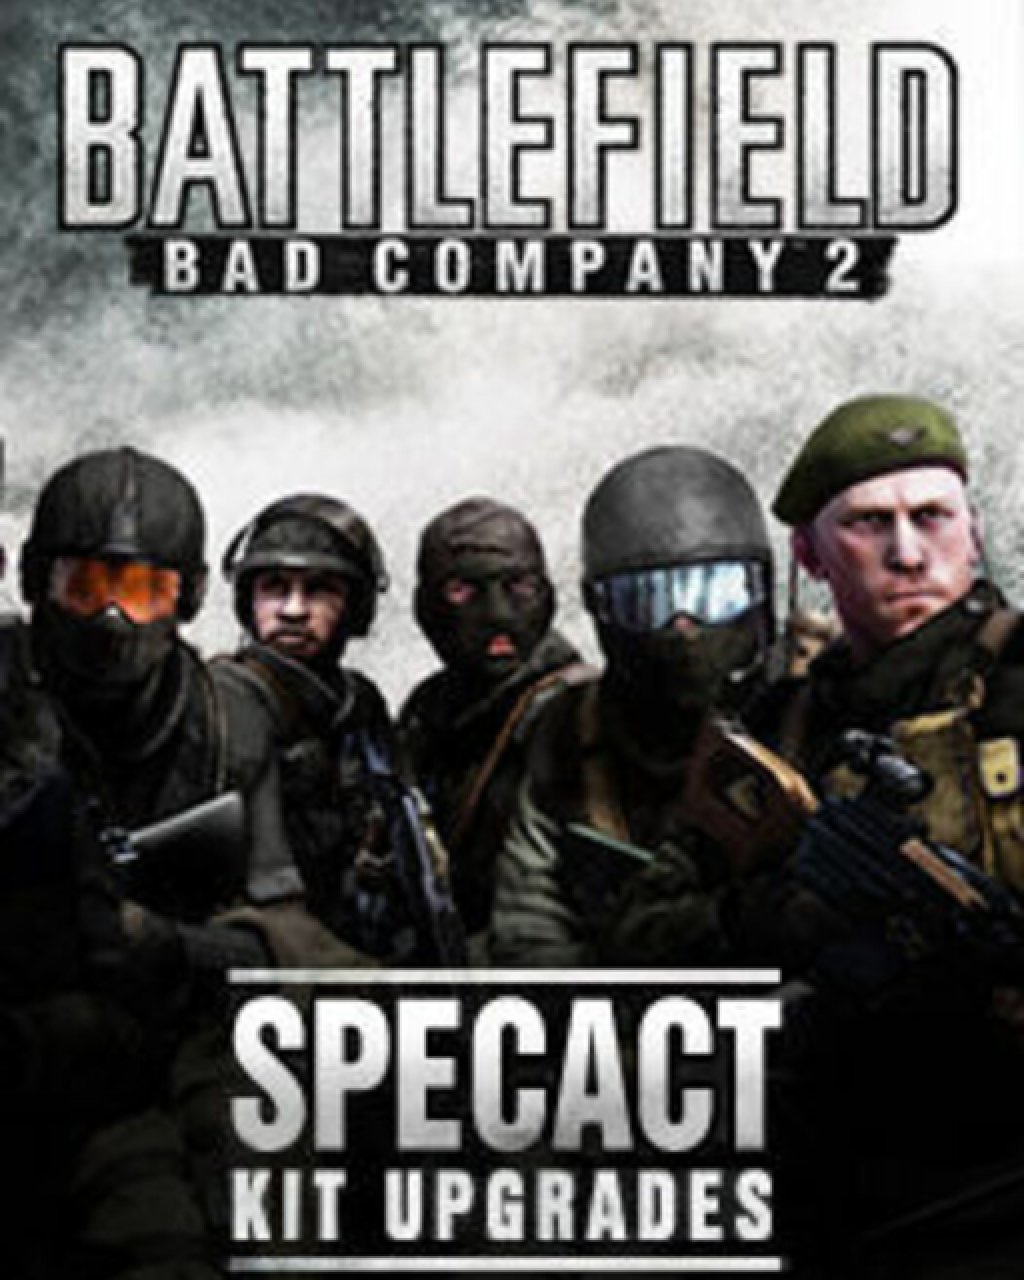 Battlefield Bad Company 2 Specact Kit Upgrade